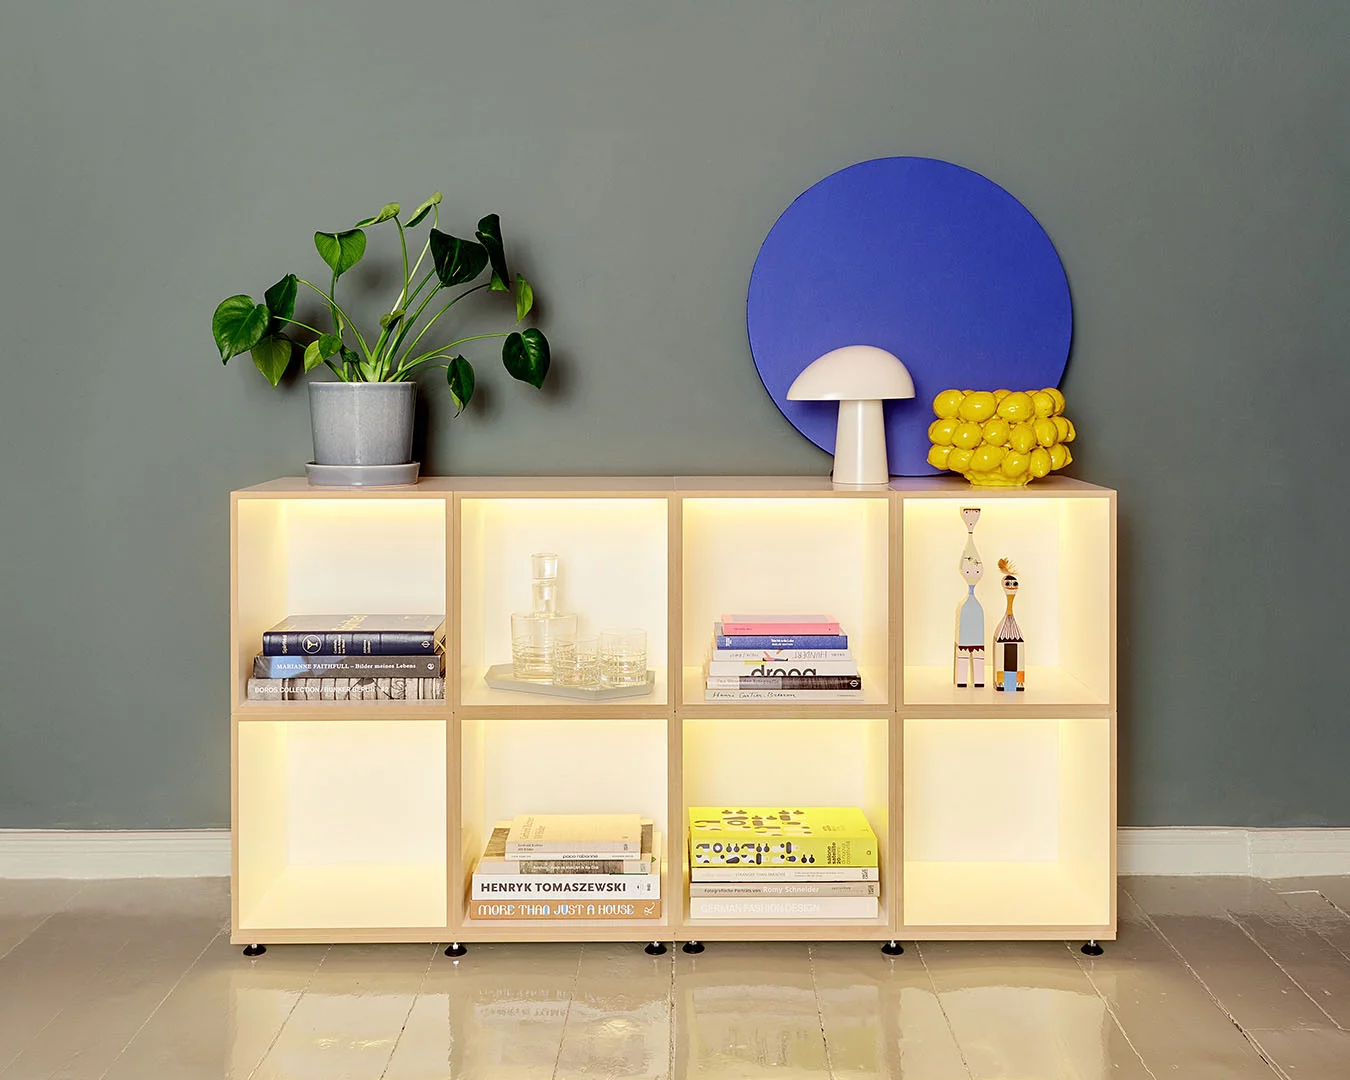 Kategorien, LED-Sideboard, Kreis, Bücher, Pflanze, Wand, dunkel, grün, blau, gelb